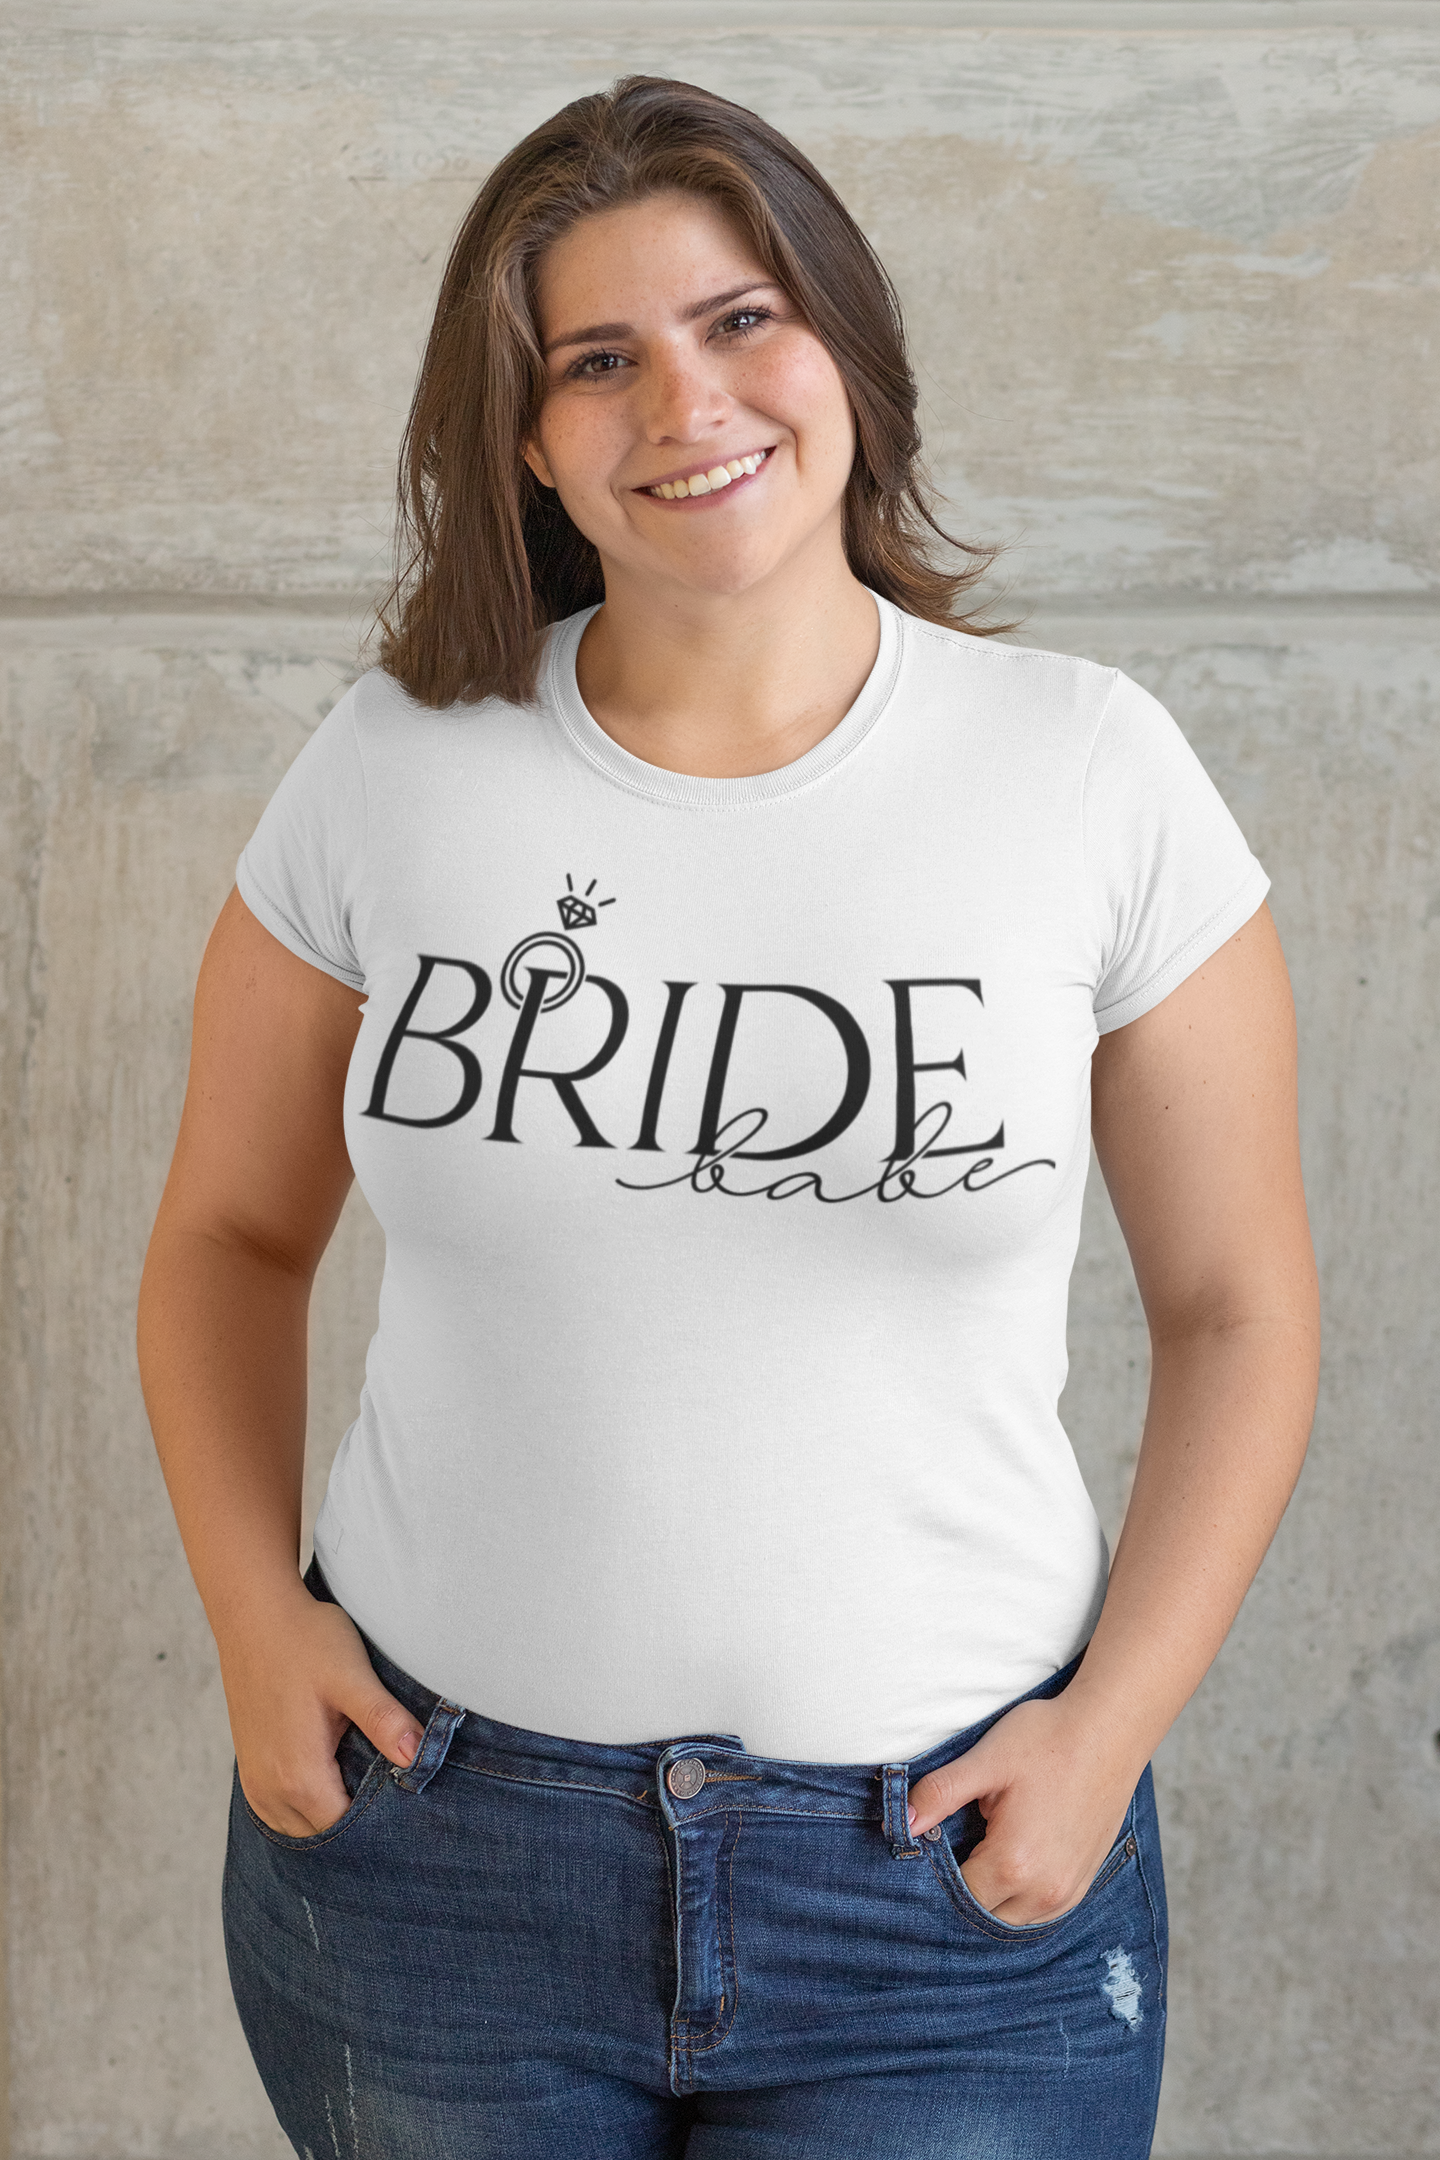 Bride Babe T-Shirt